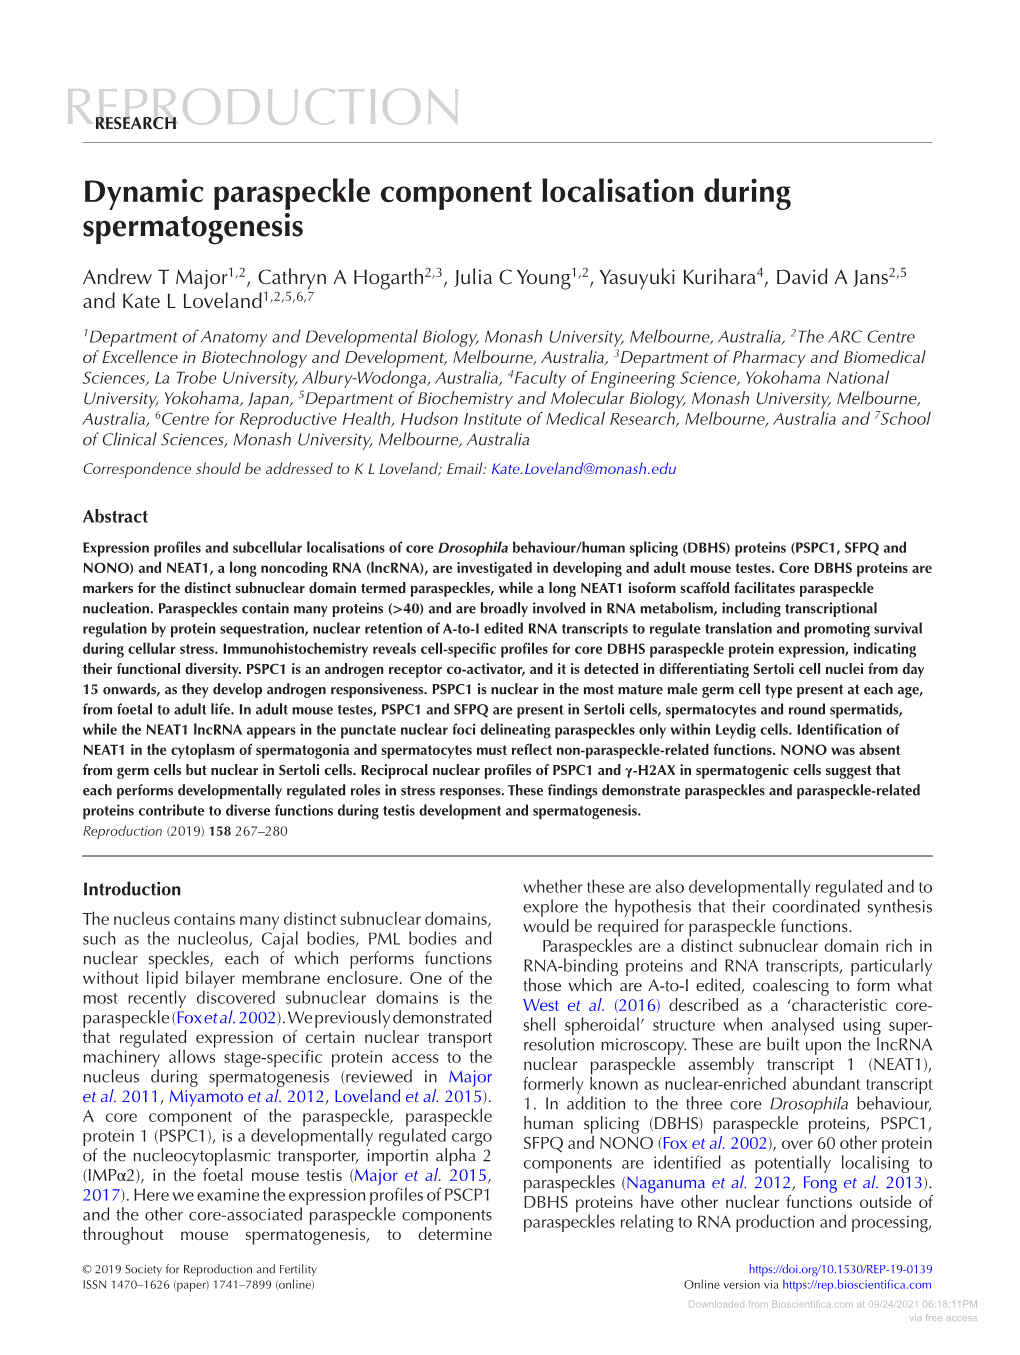 Dynamic Paraspeckle Component Localisation During Spermatogenesis